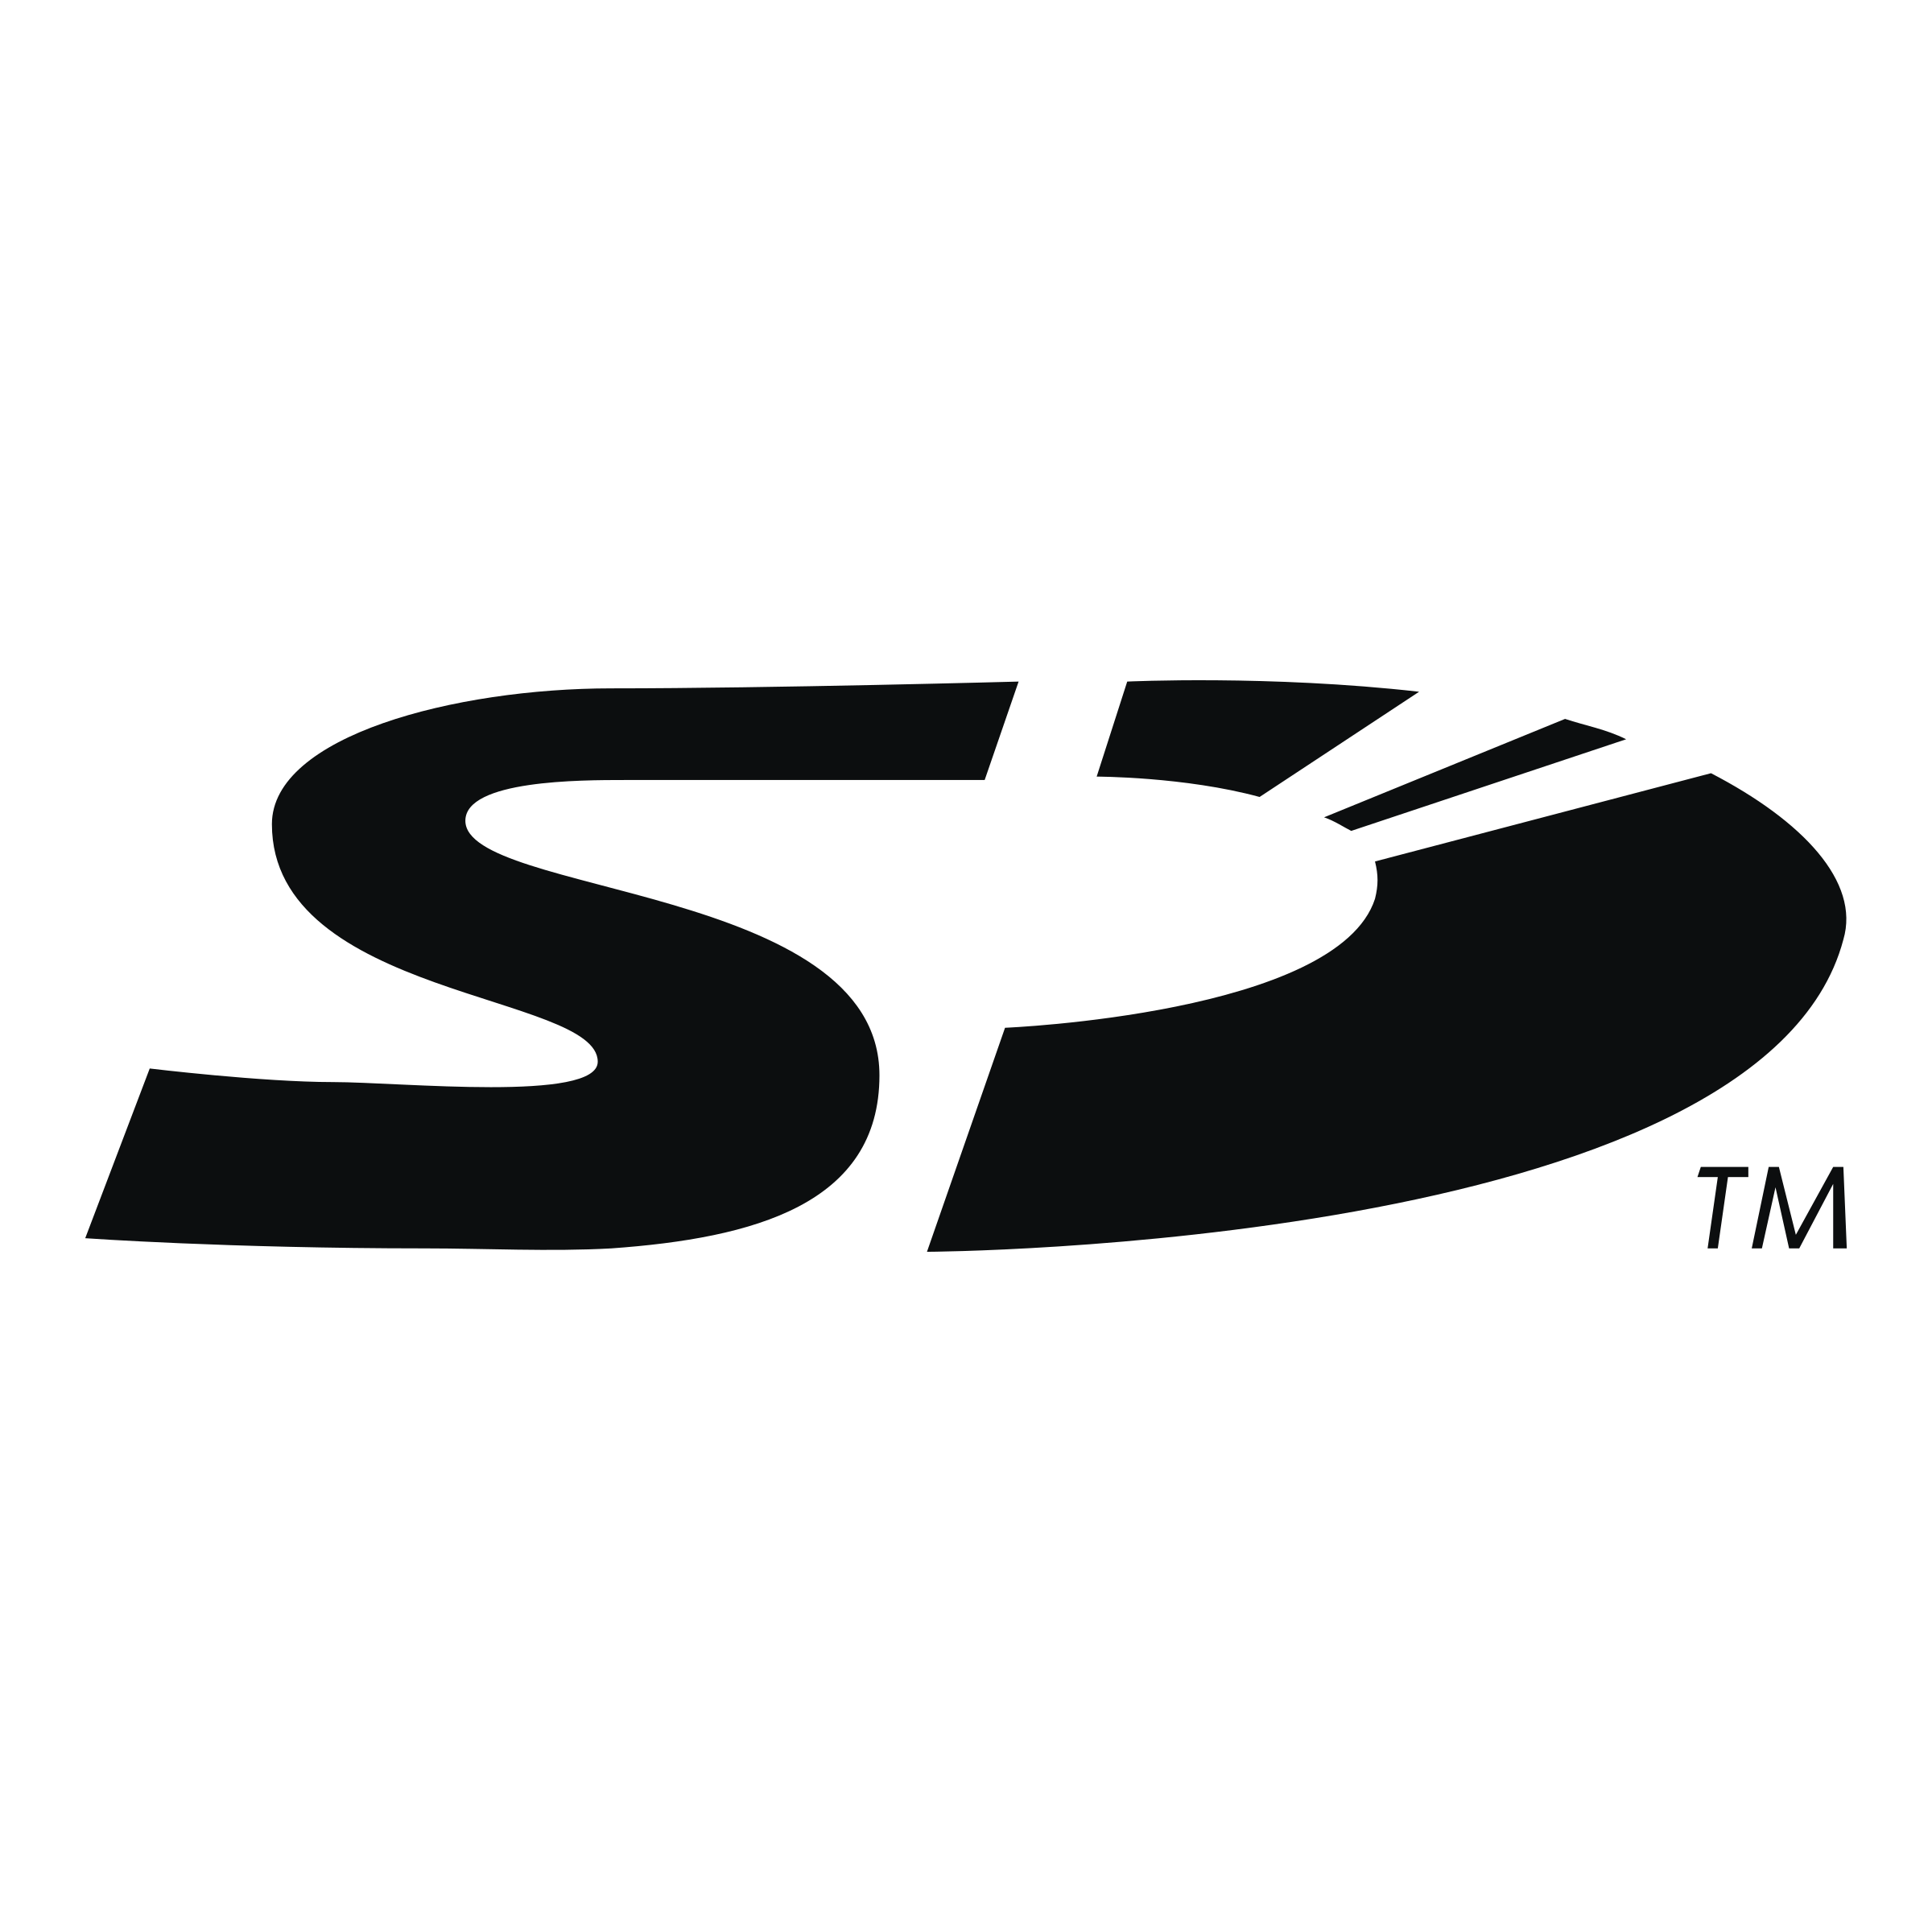 SD CD Logo PNG Transparent & SVG Vector.